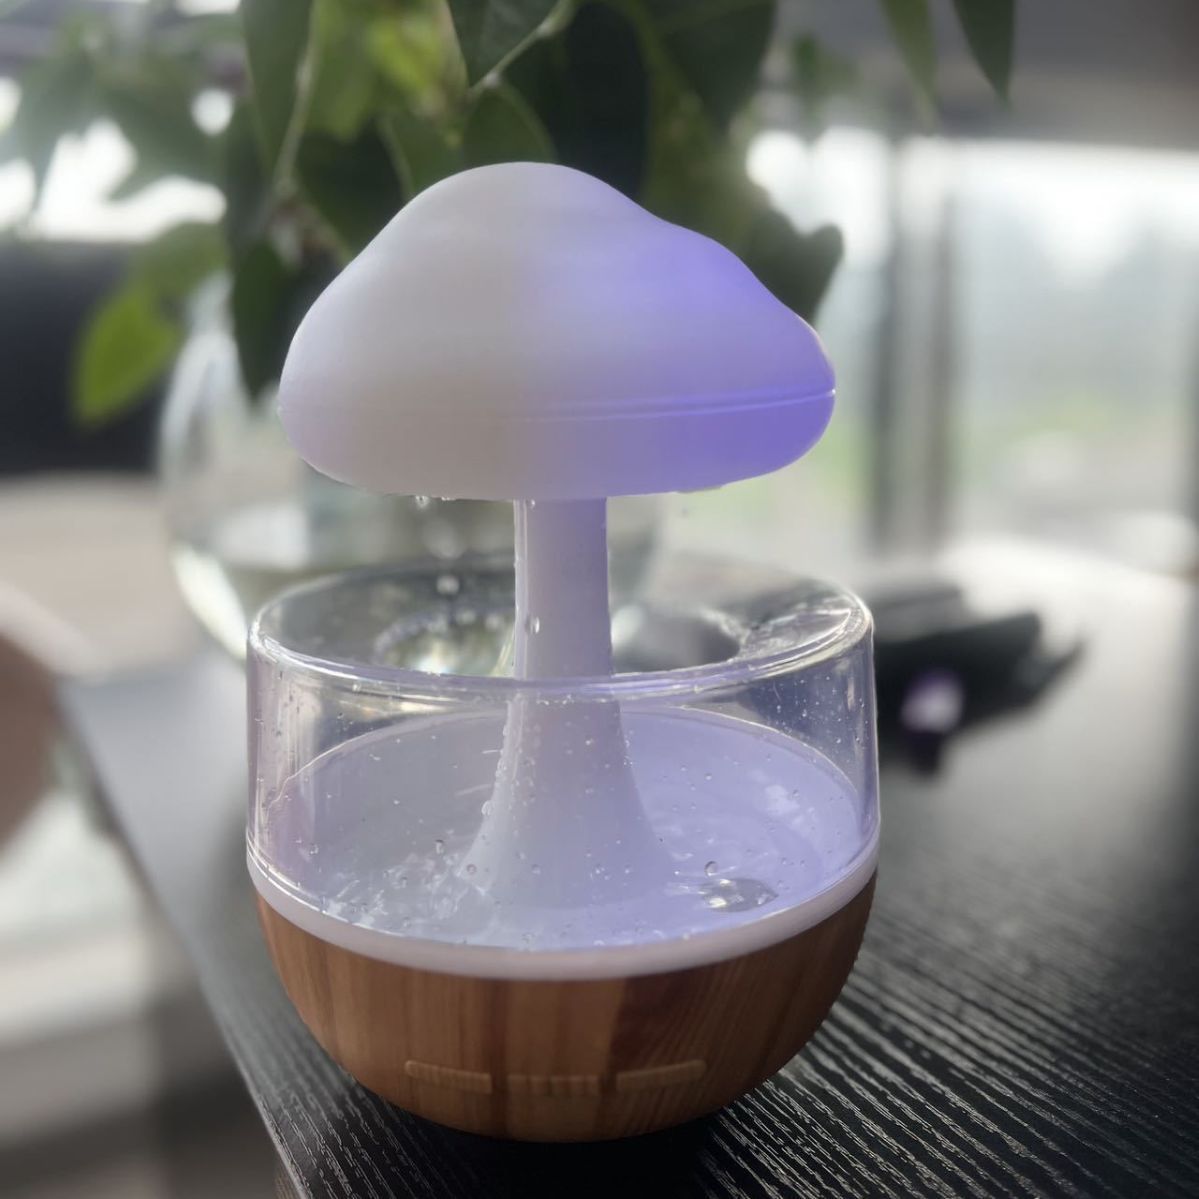 New Humidifier Mushroom Cloud Rain Humidifier Colorful Mushroom Cloud Raindrops Atmosphere Night Light Aromatherapy Machine White Noise